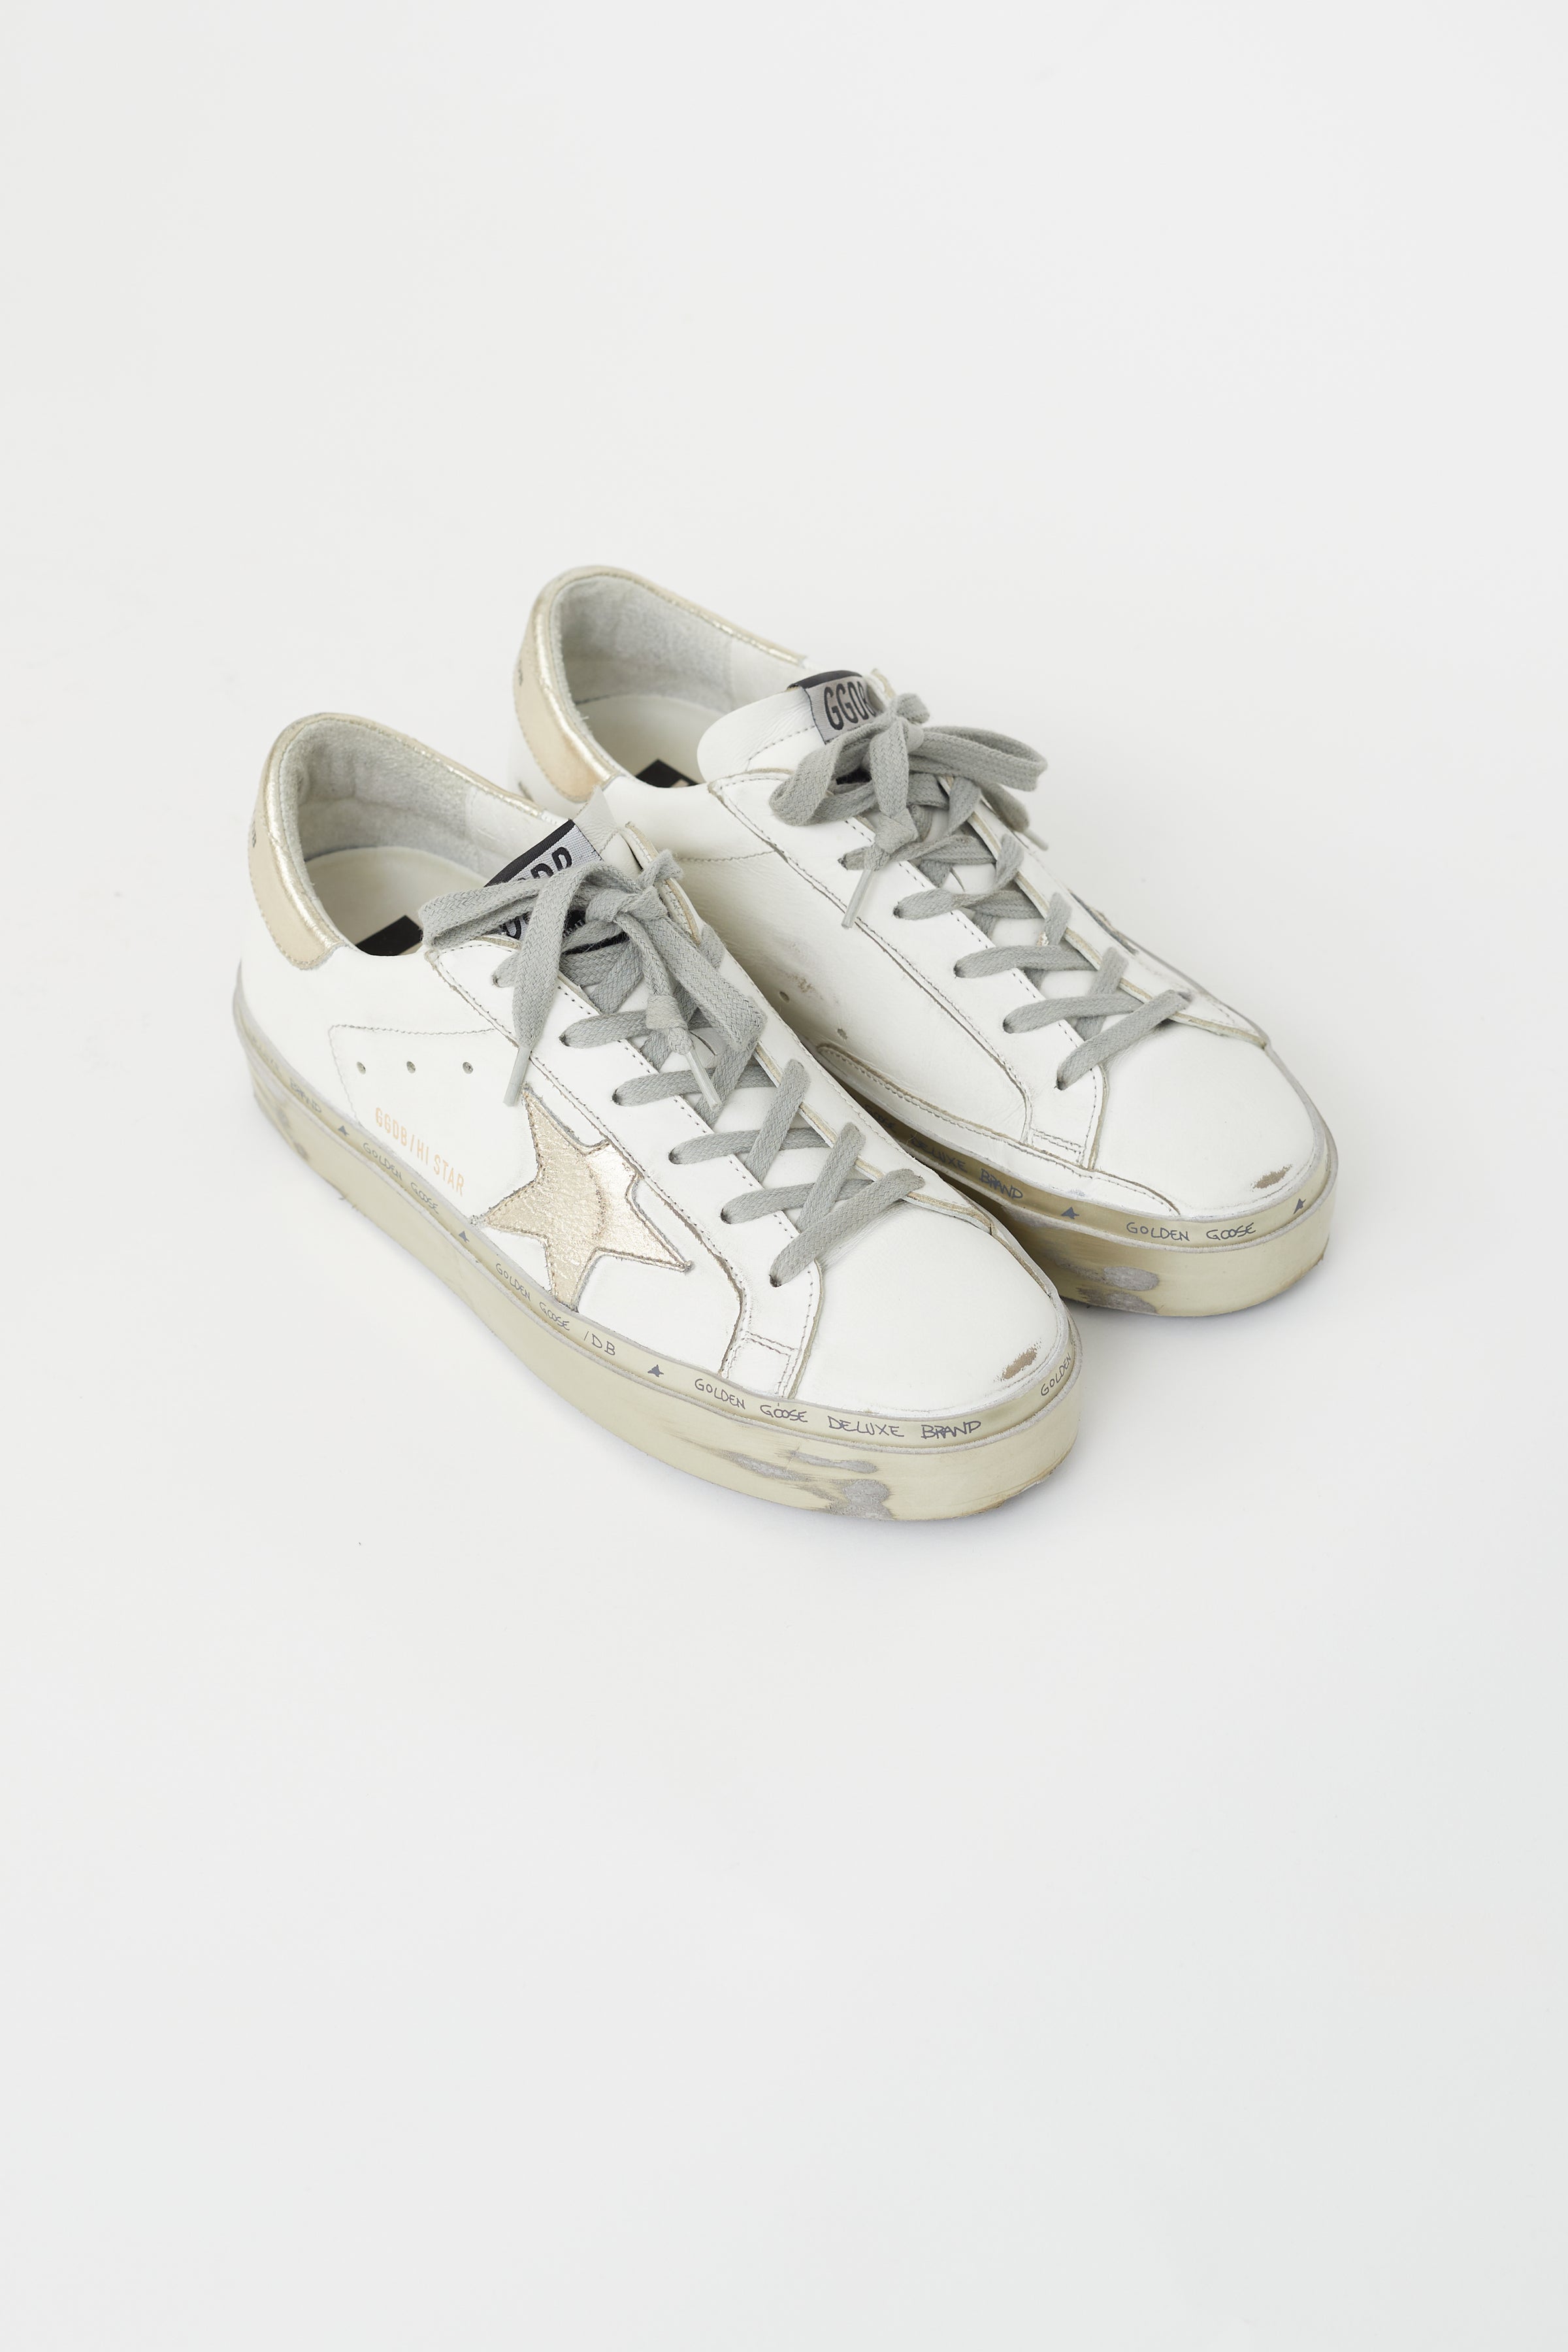 Golden Goose Hi Star Sneaker Pink Glitter Silver Sneakers Platform | eBay